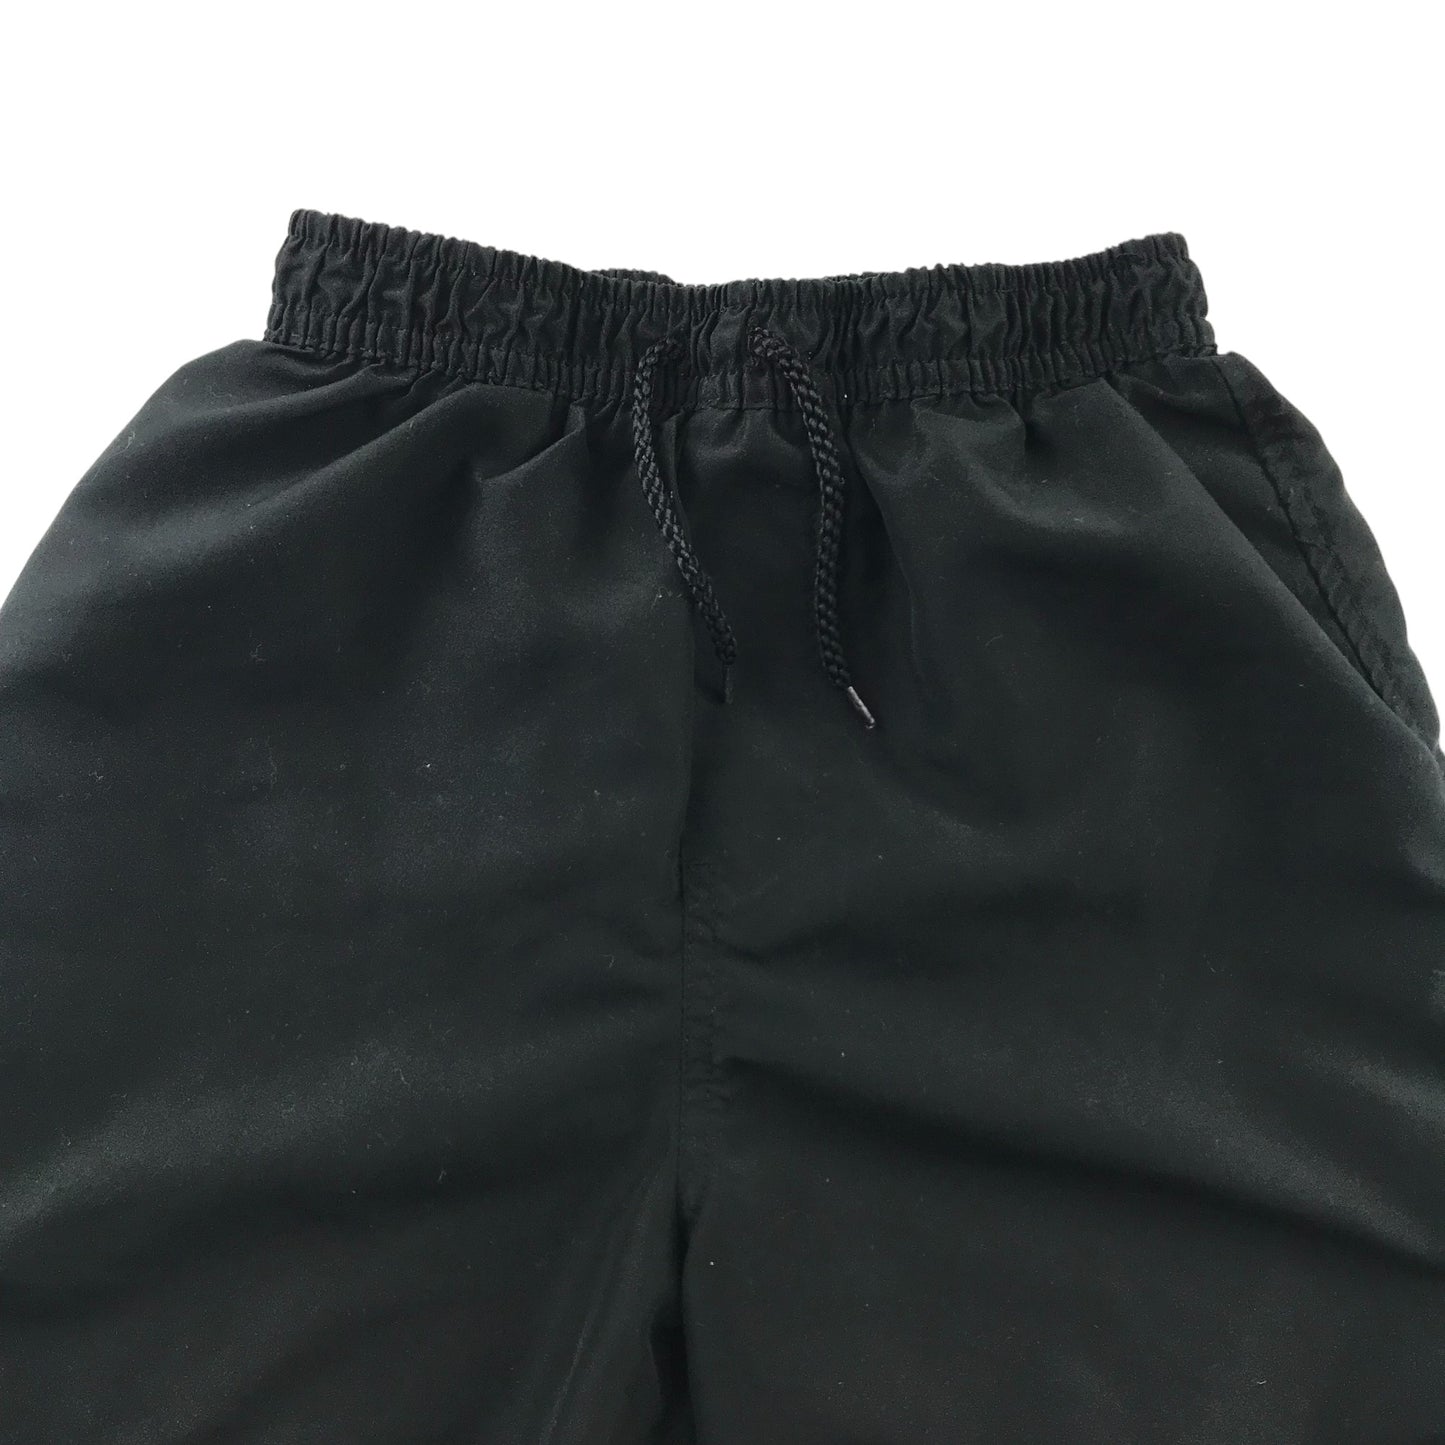 George Swim Trunks Age 8 Black Plain Design Shorts